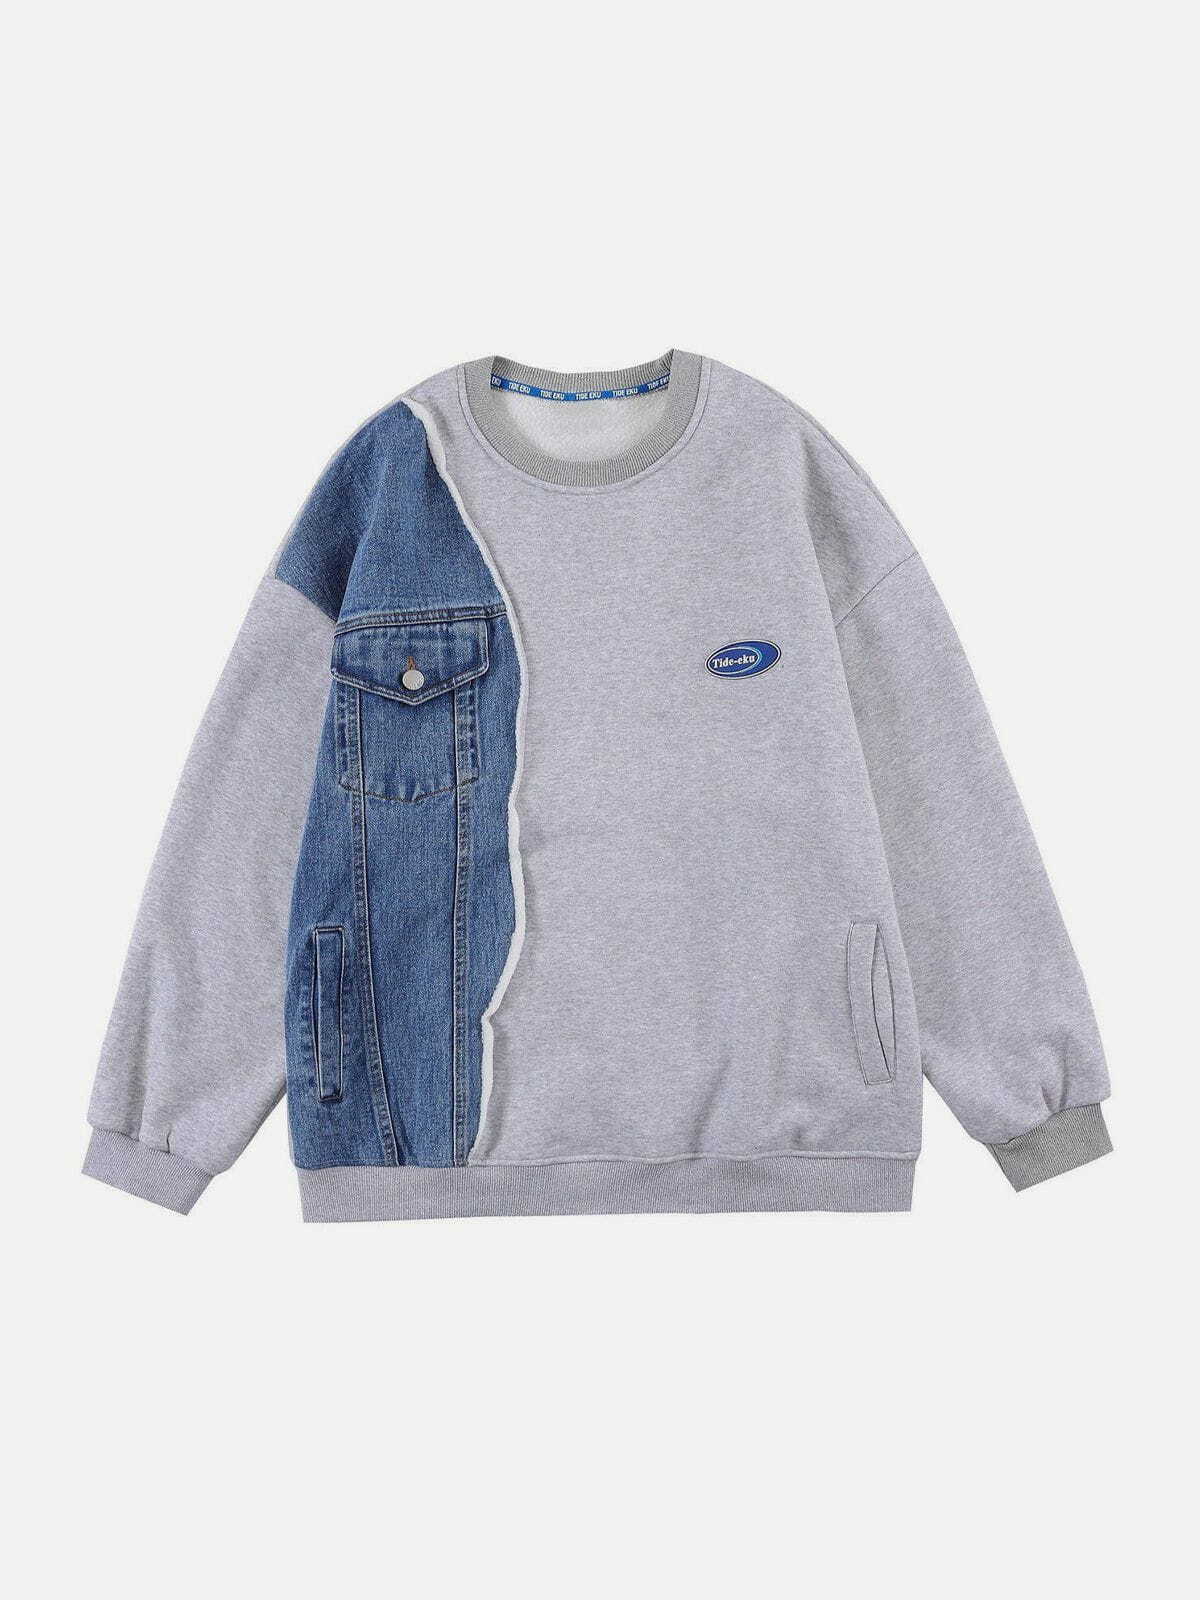 patchwork denim sweatshirt edgy & unique streetwear 5853